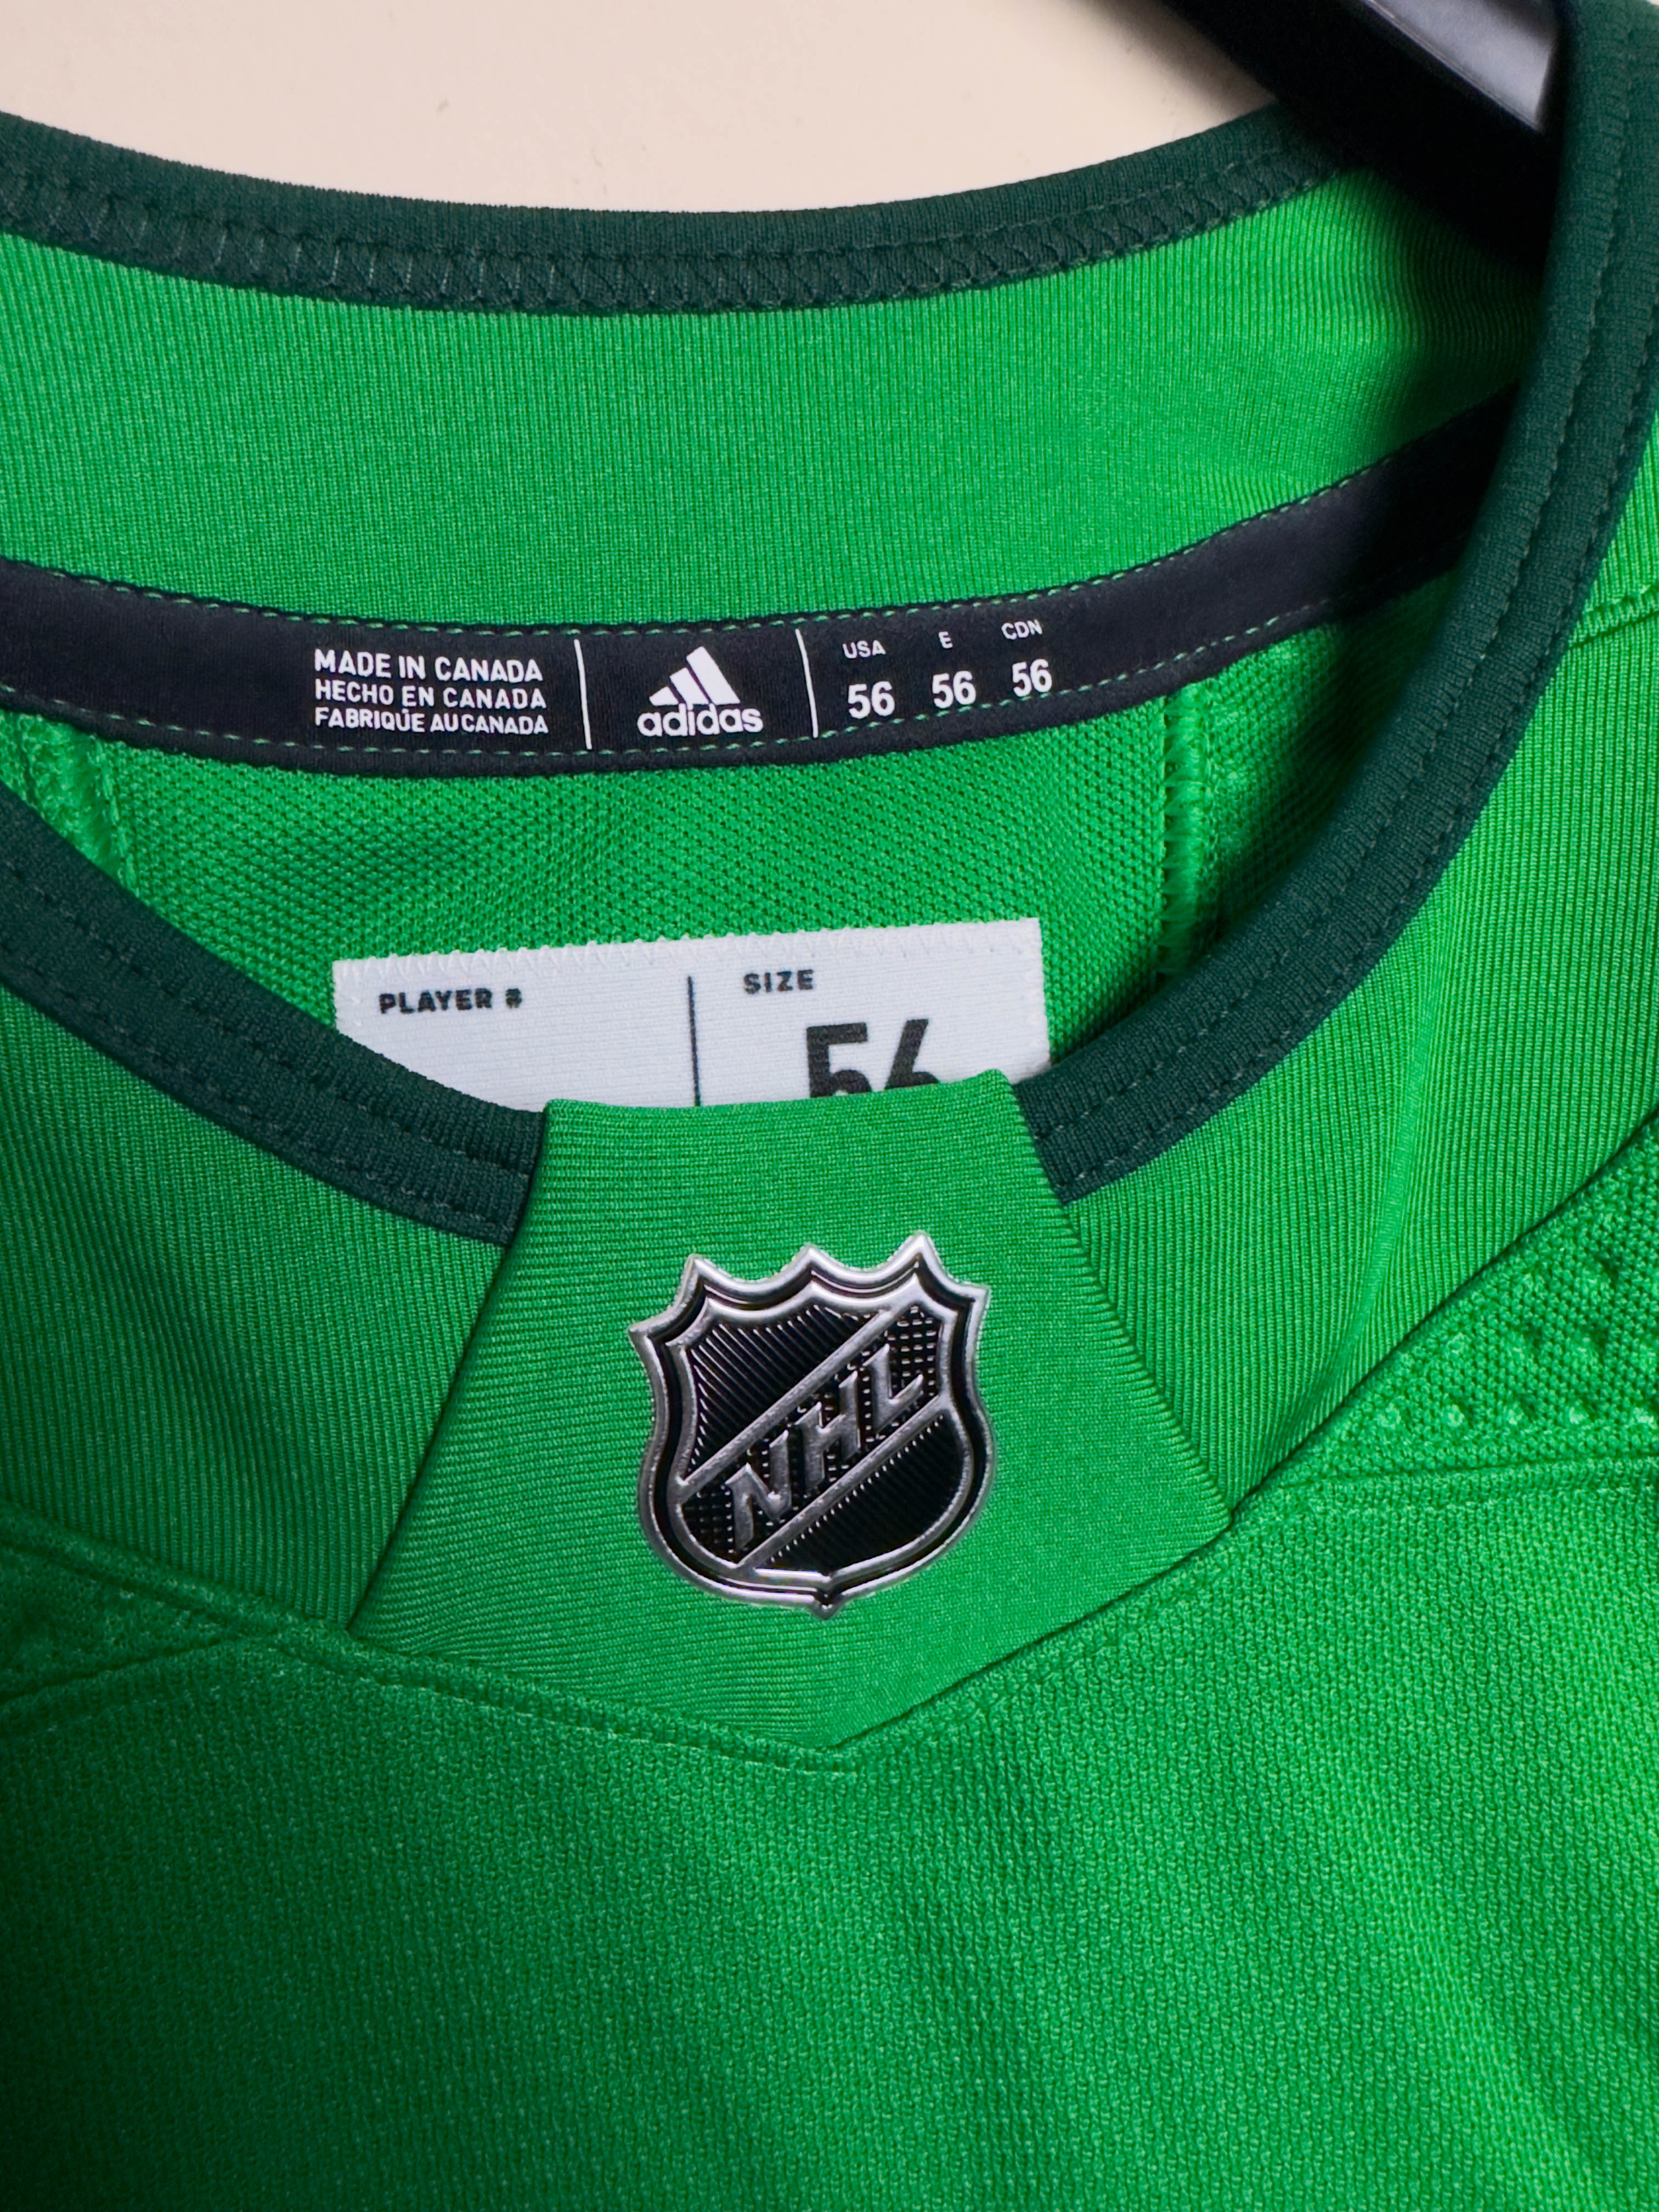 Minnesota Wild Adidas Authentic NHL Hockey Jersey NWT Mens Size 56